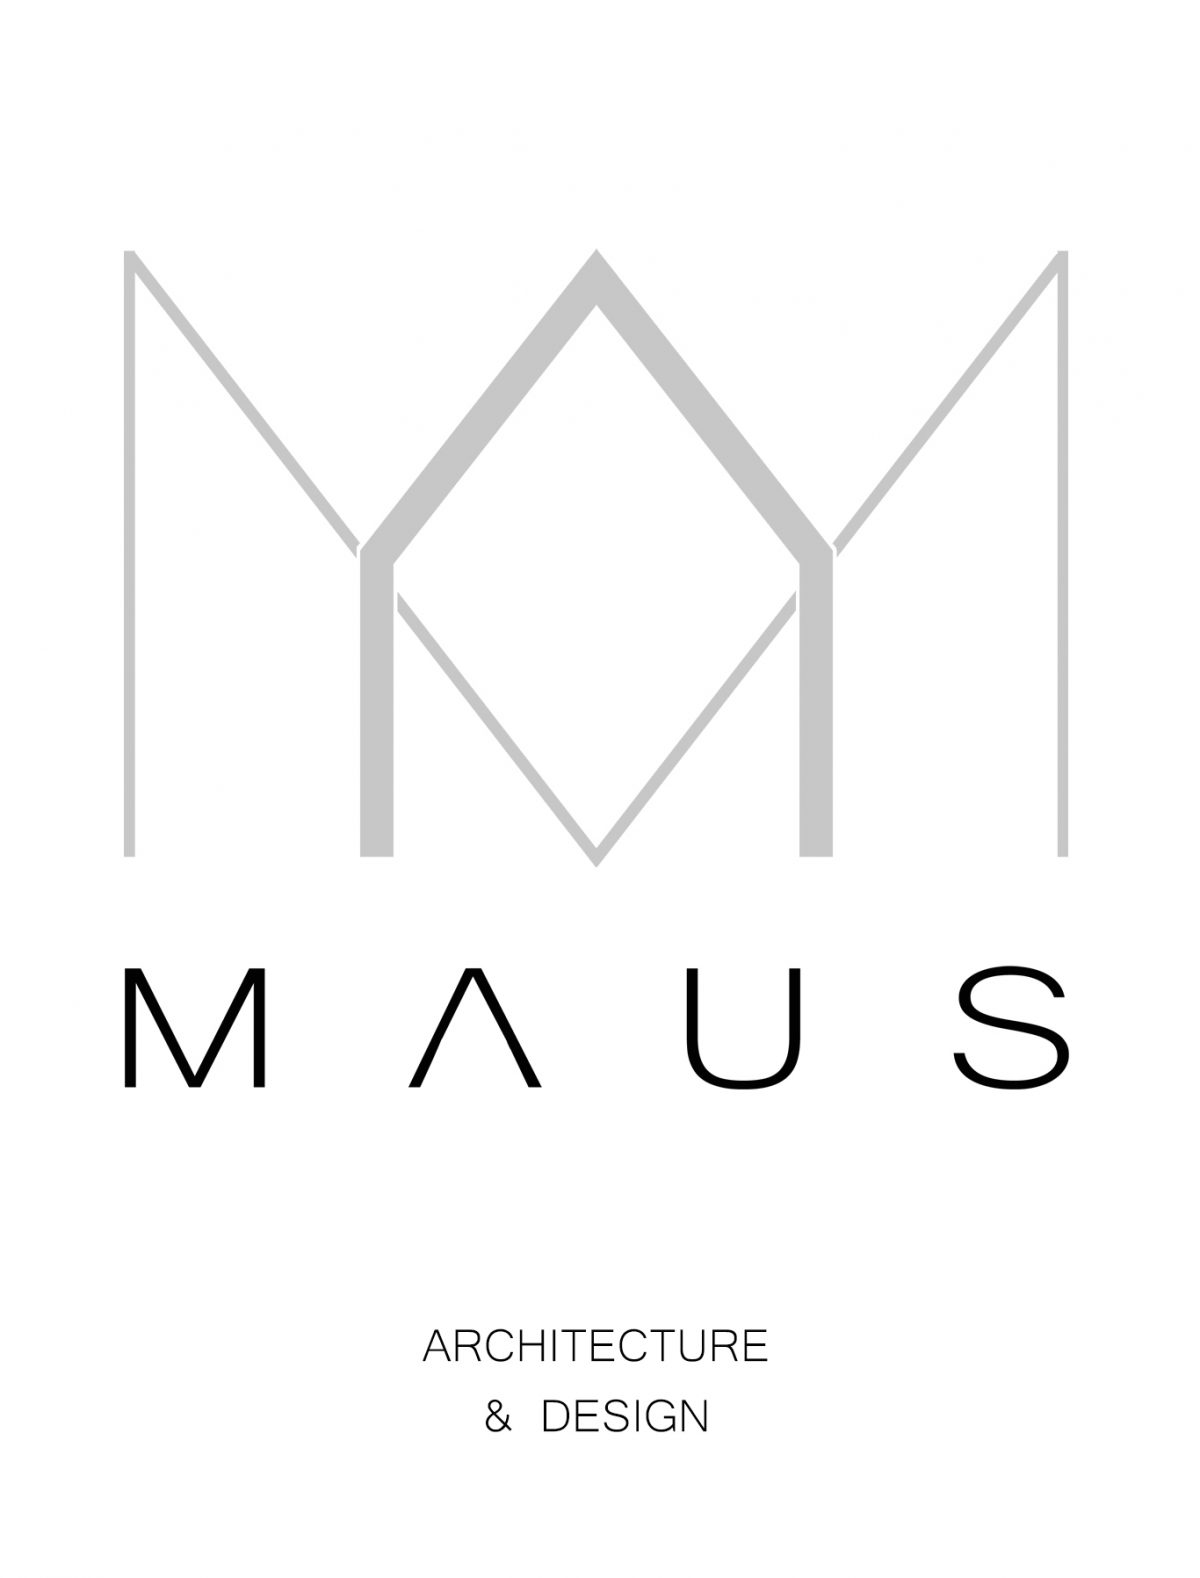 MAUS Architecture & Design